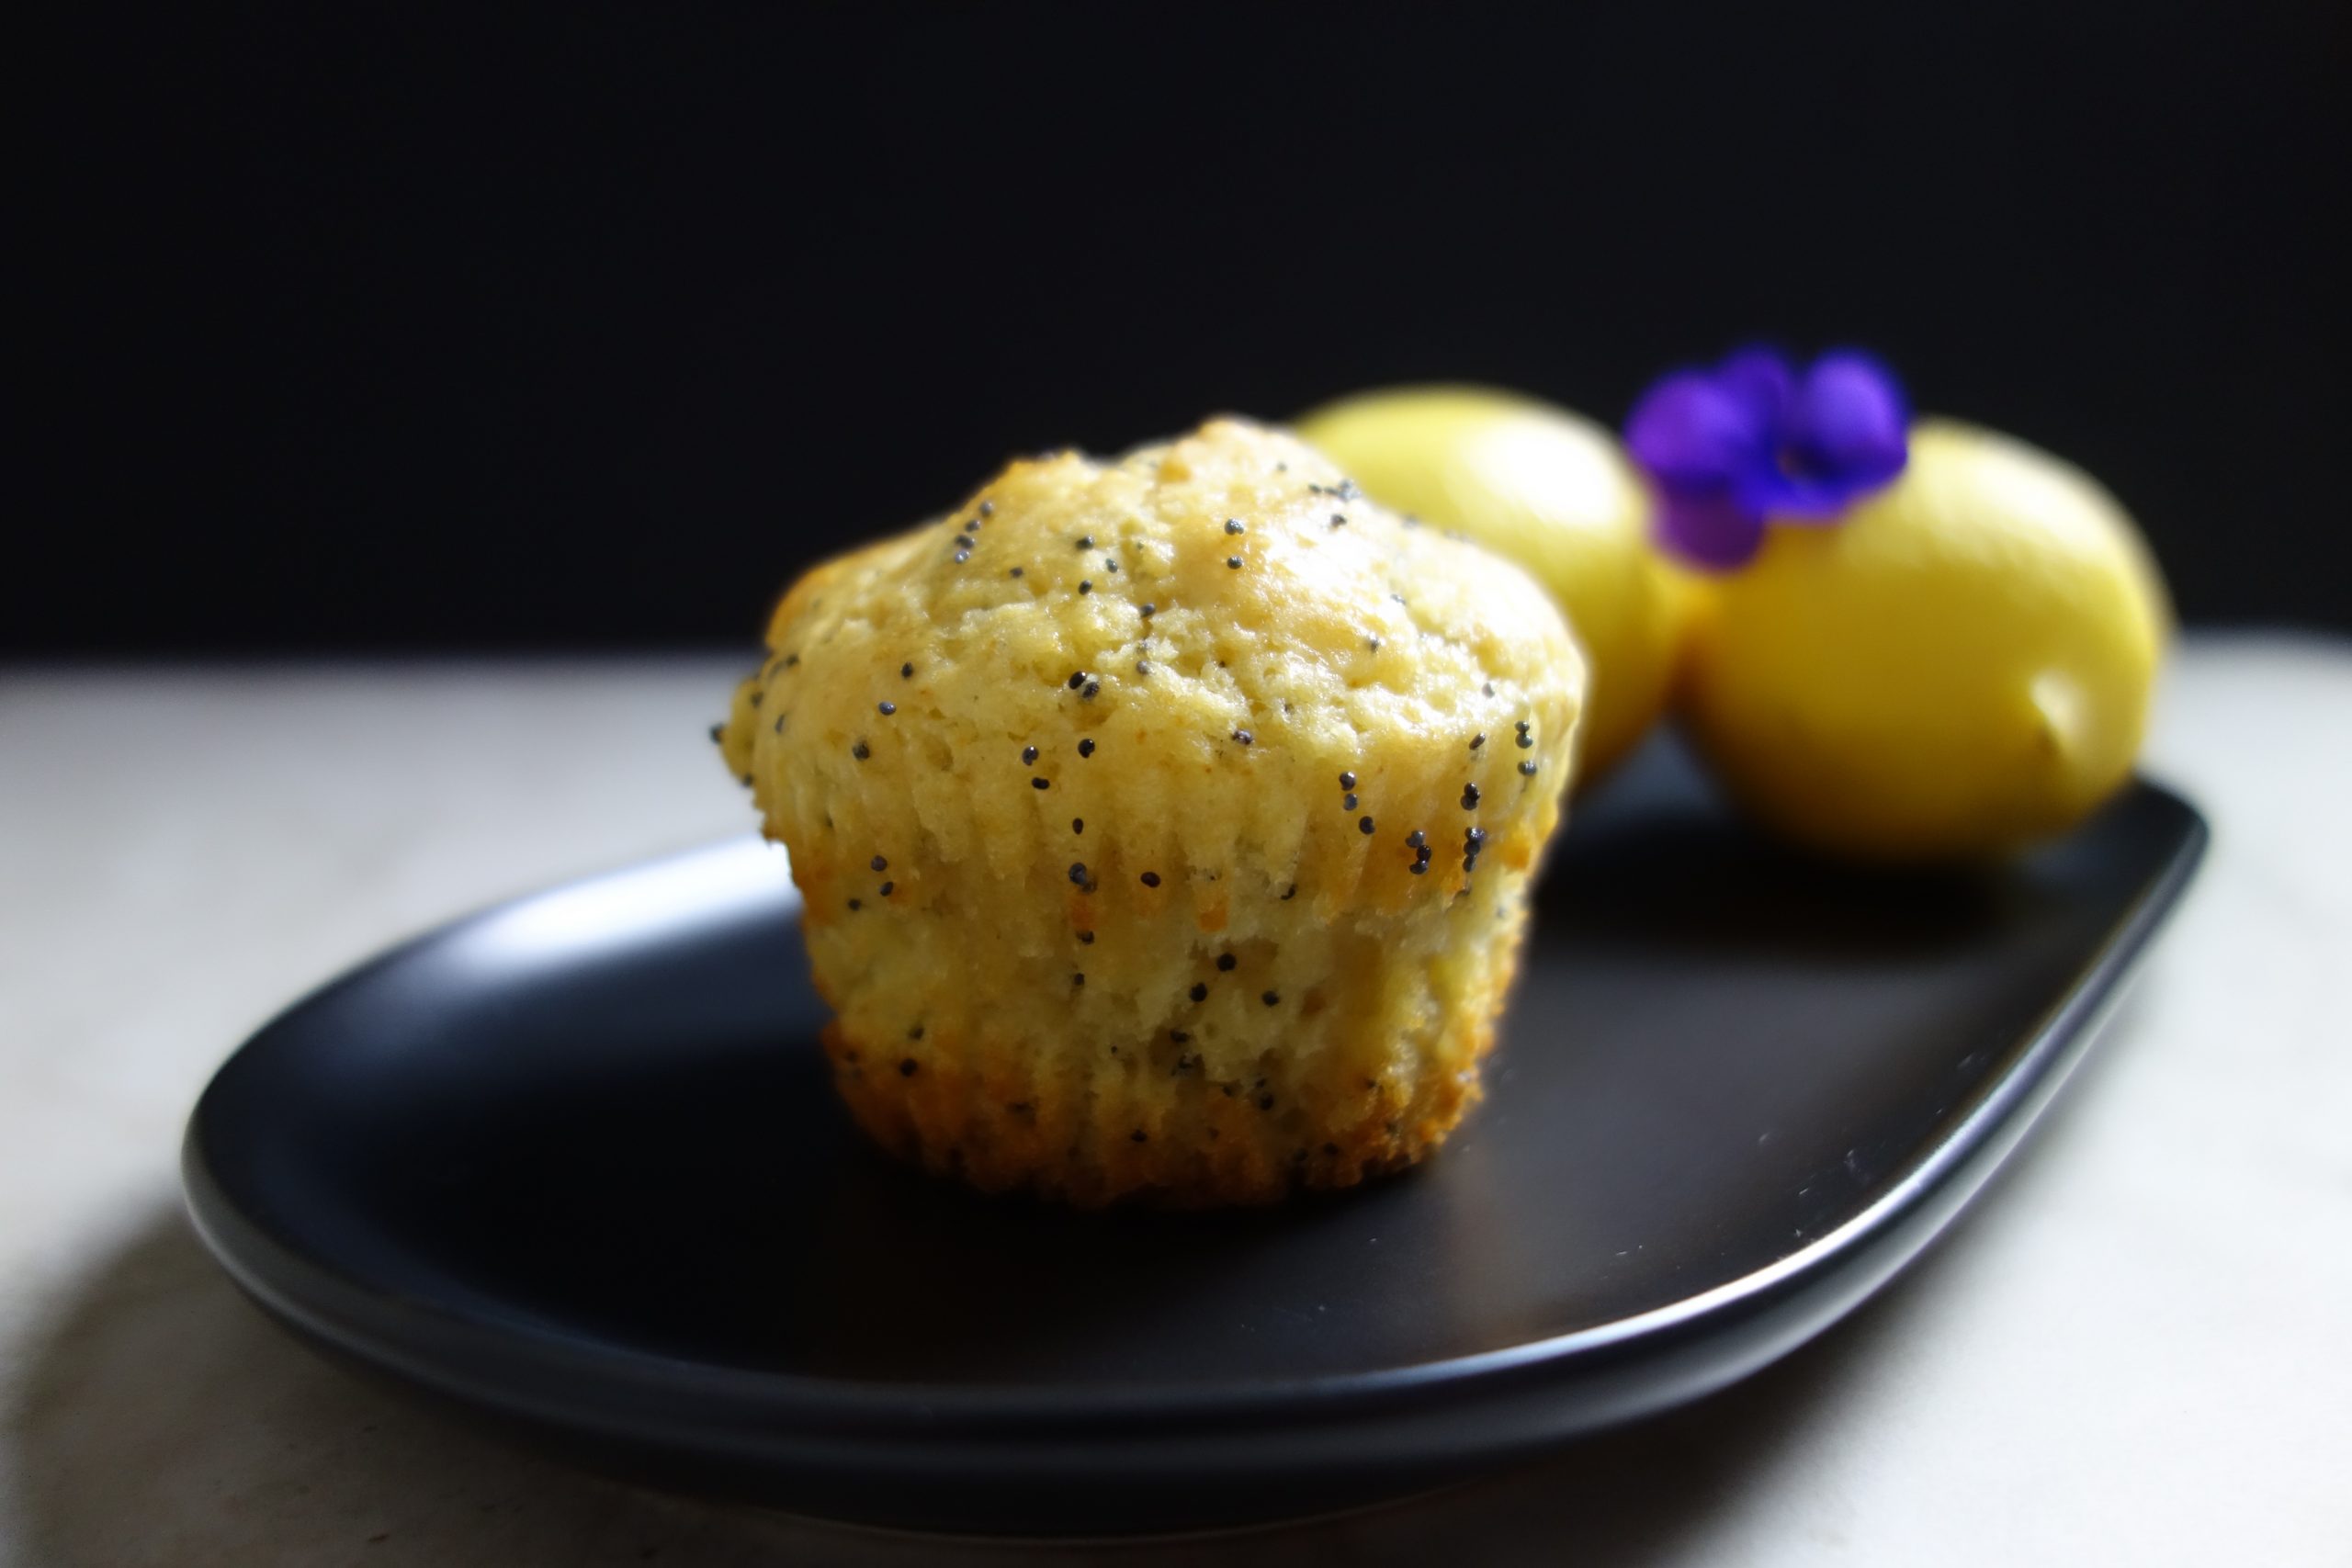 lemon poppy seed muffin on a black plate